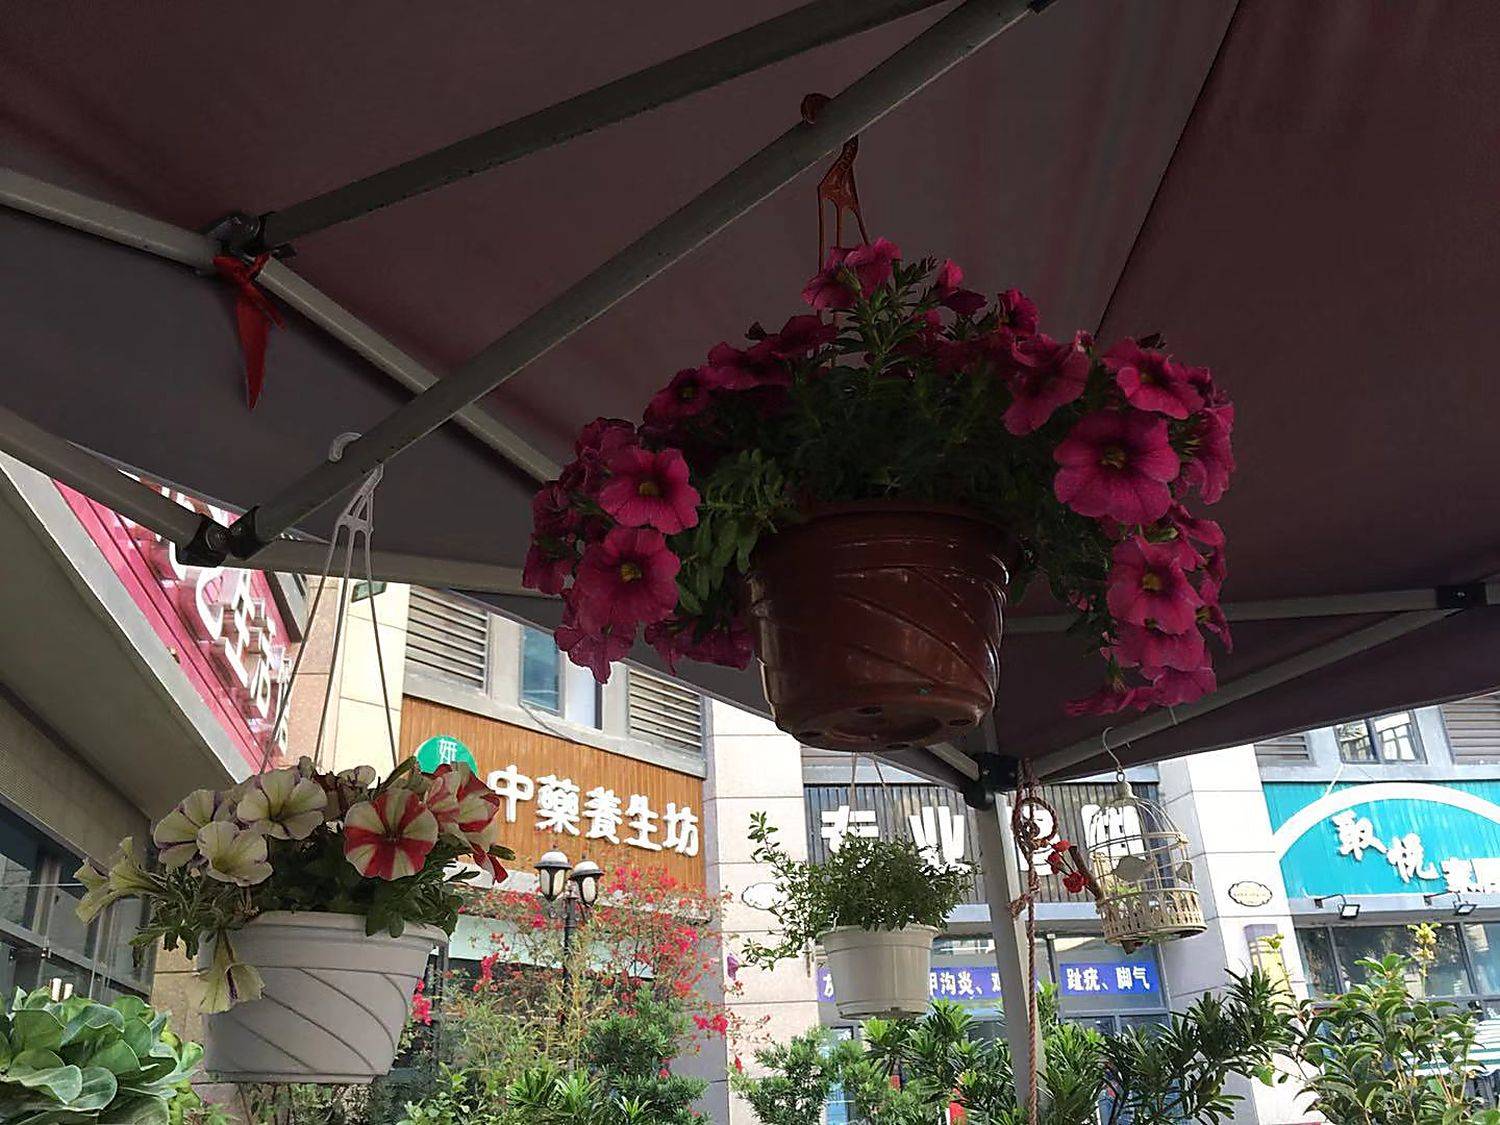 Flower shop next to the house, Huizhou, South China